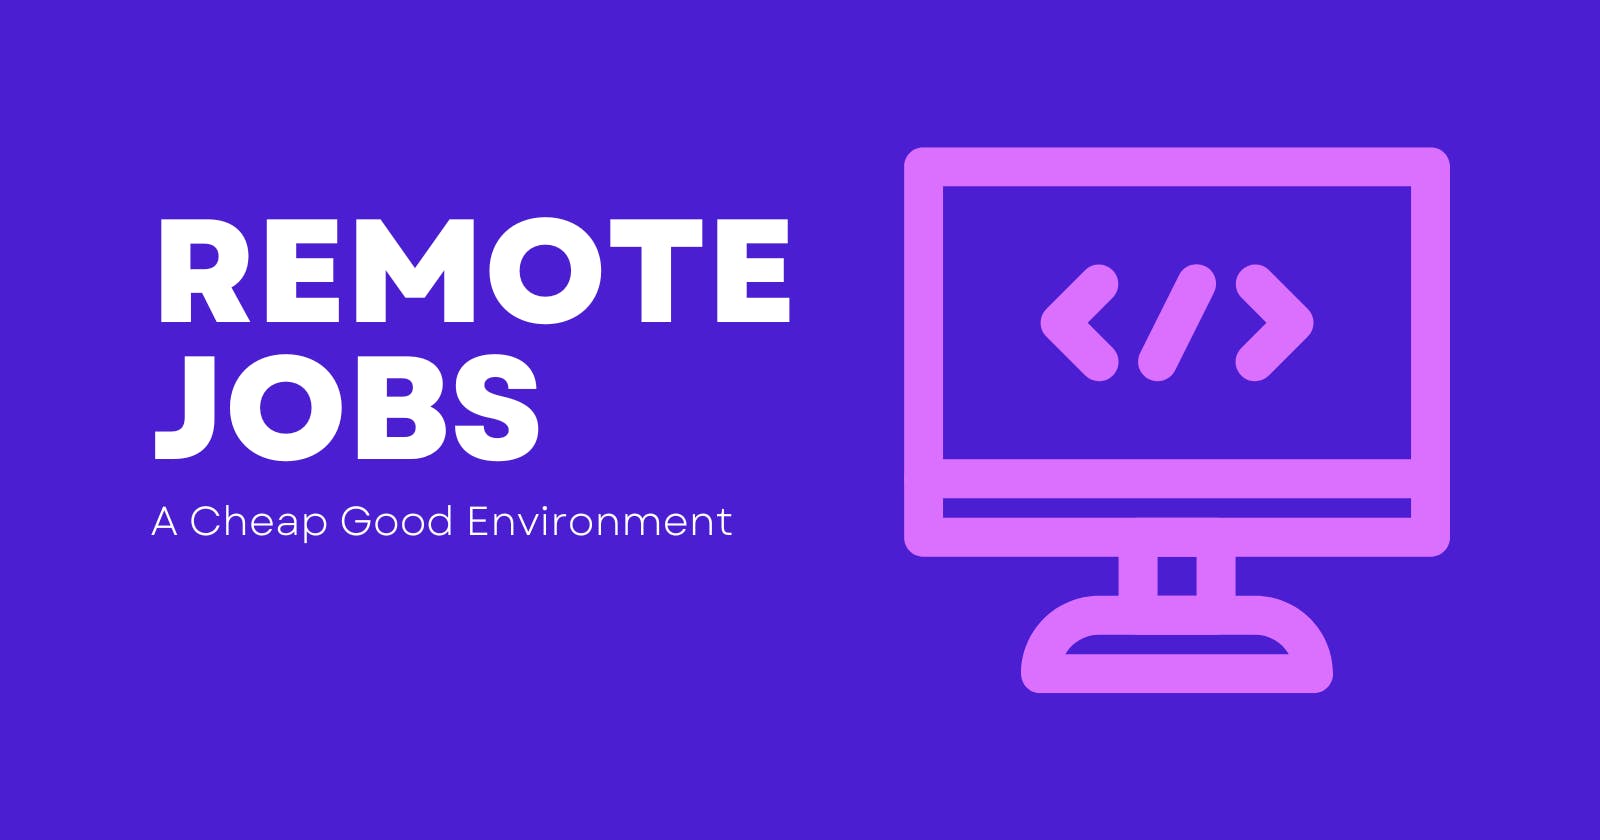 Remote Jobs Preparation - Environments